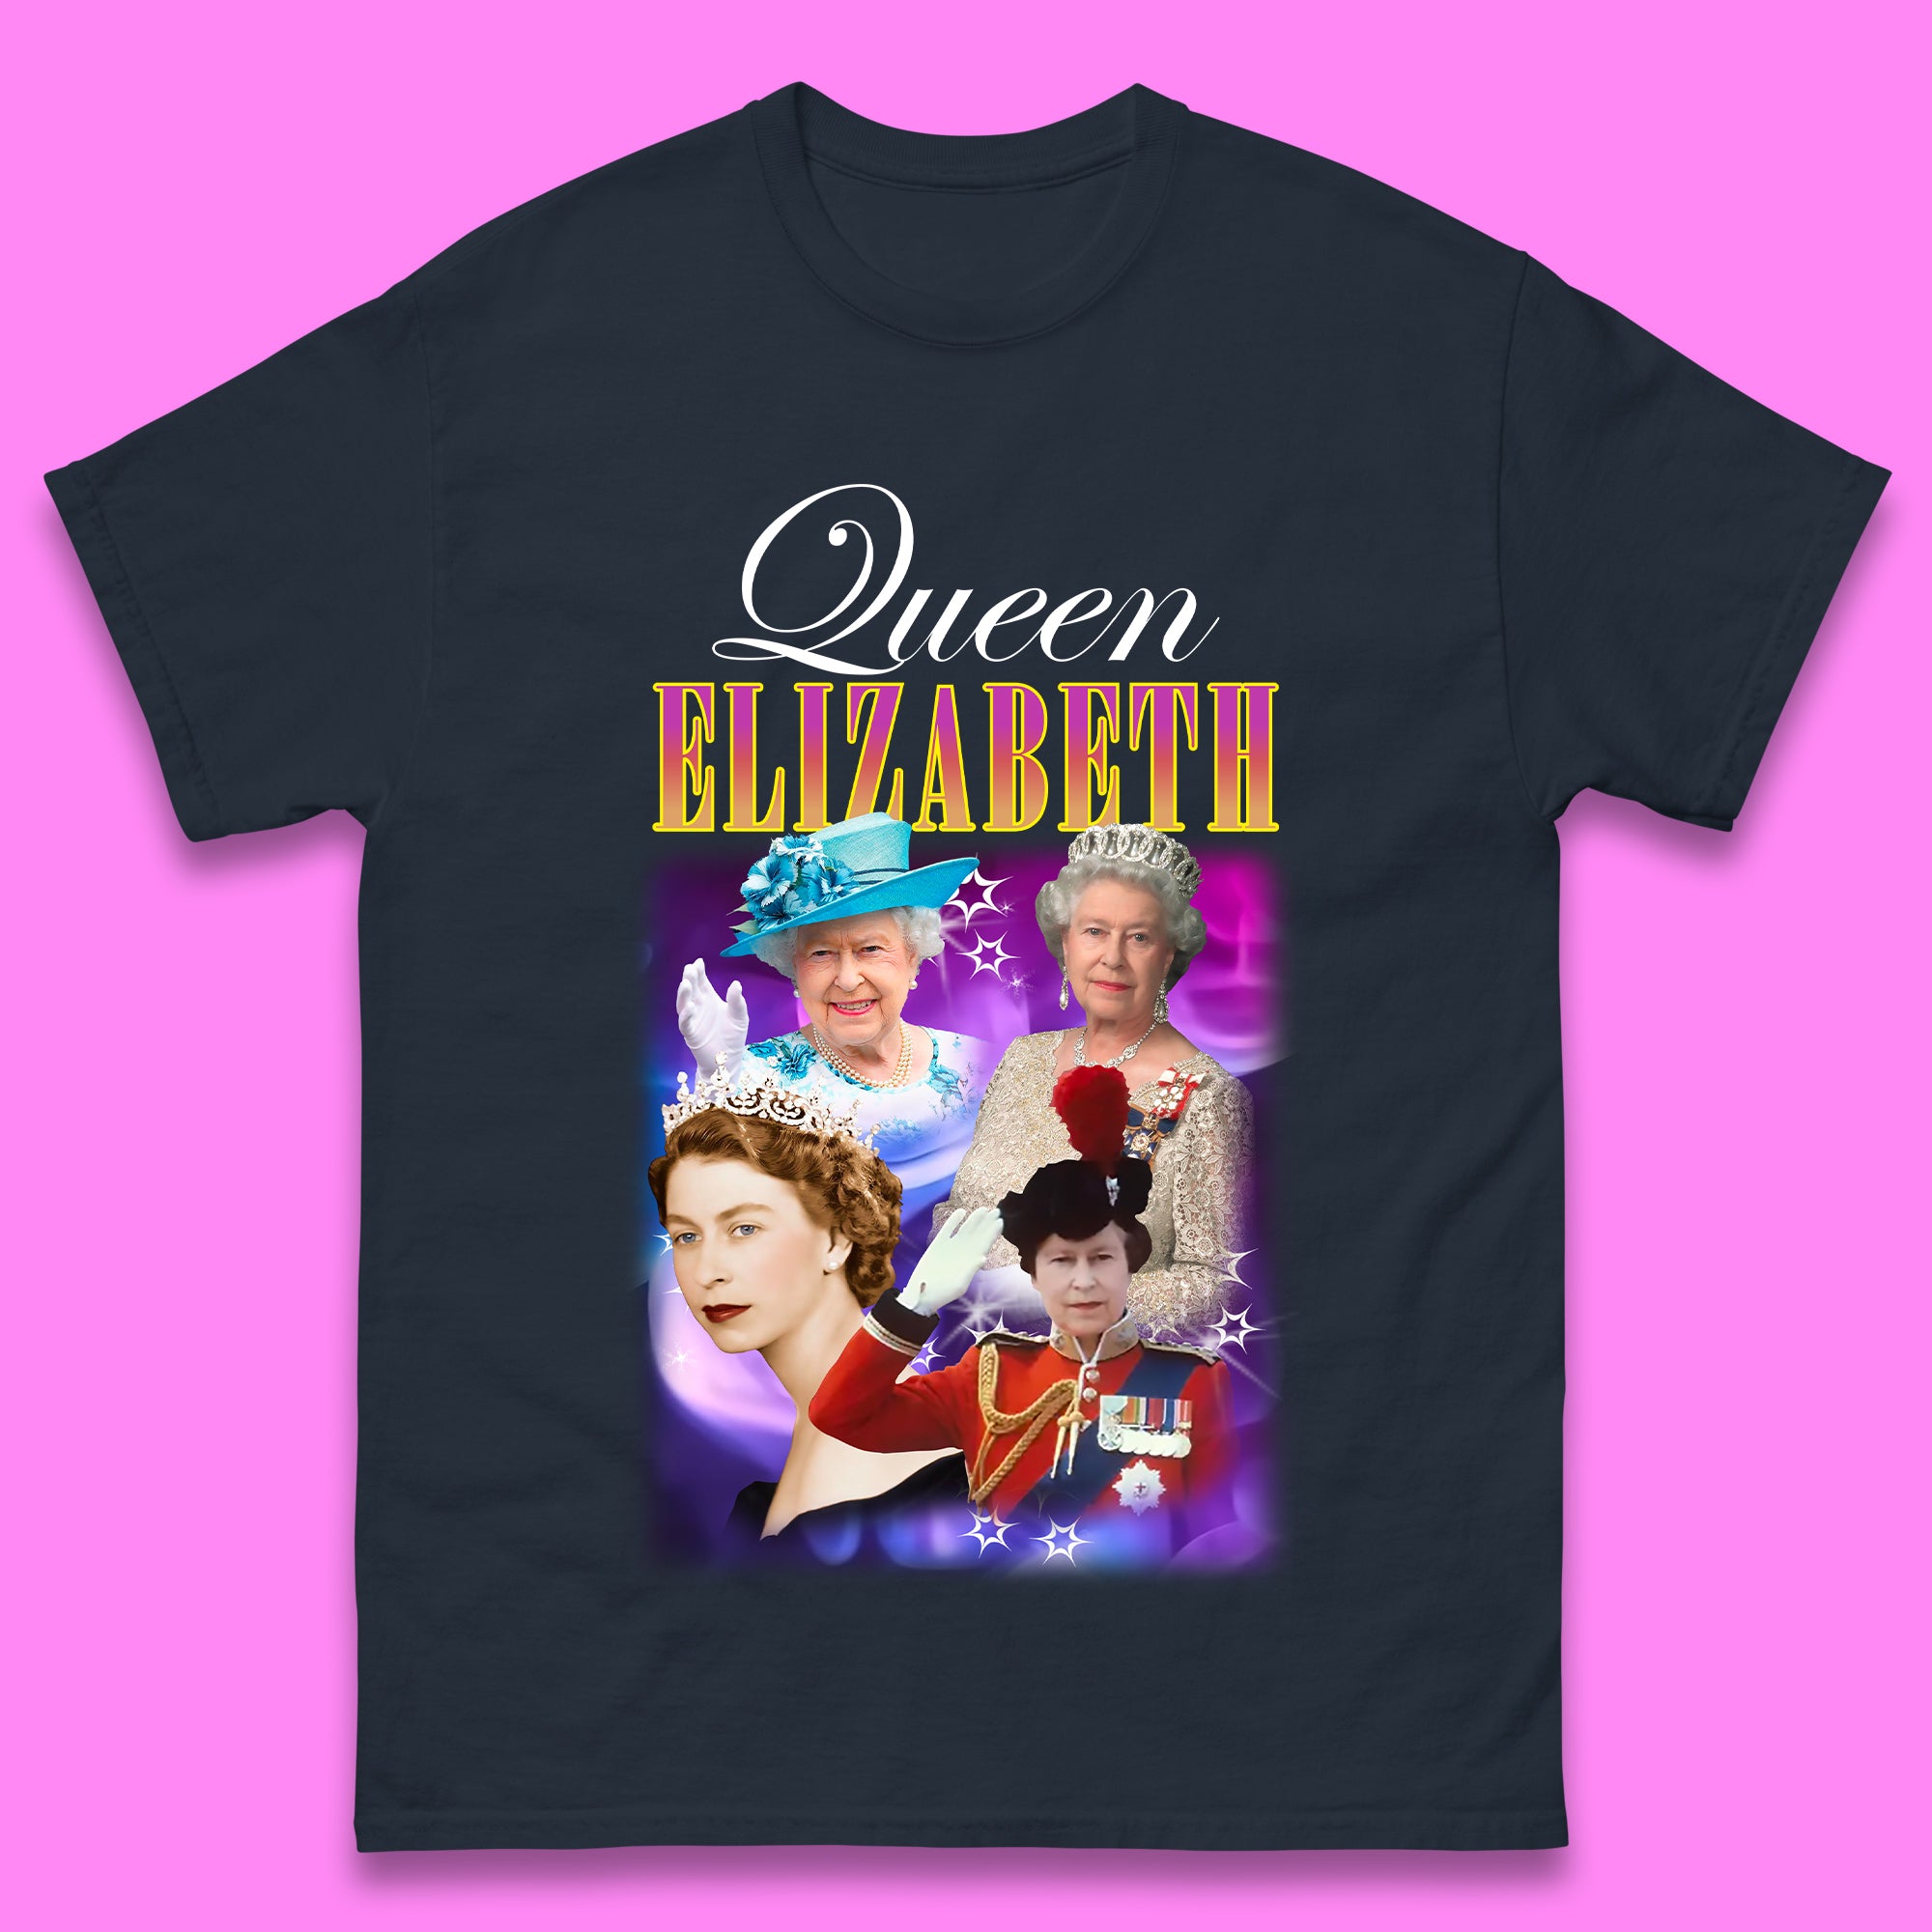 Queen Elizabeth Mens T-Shirt